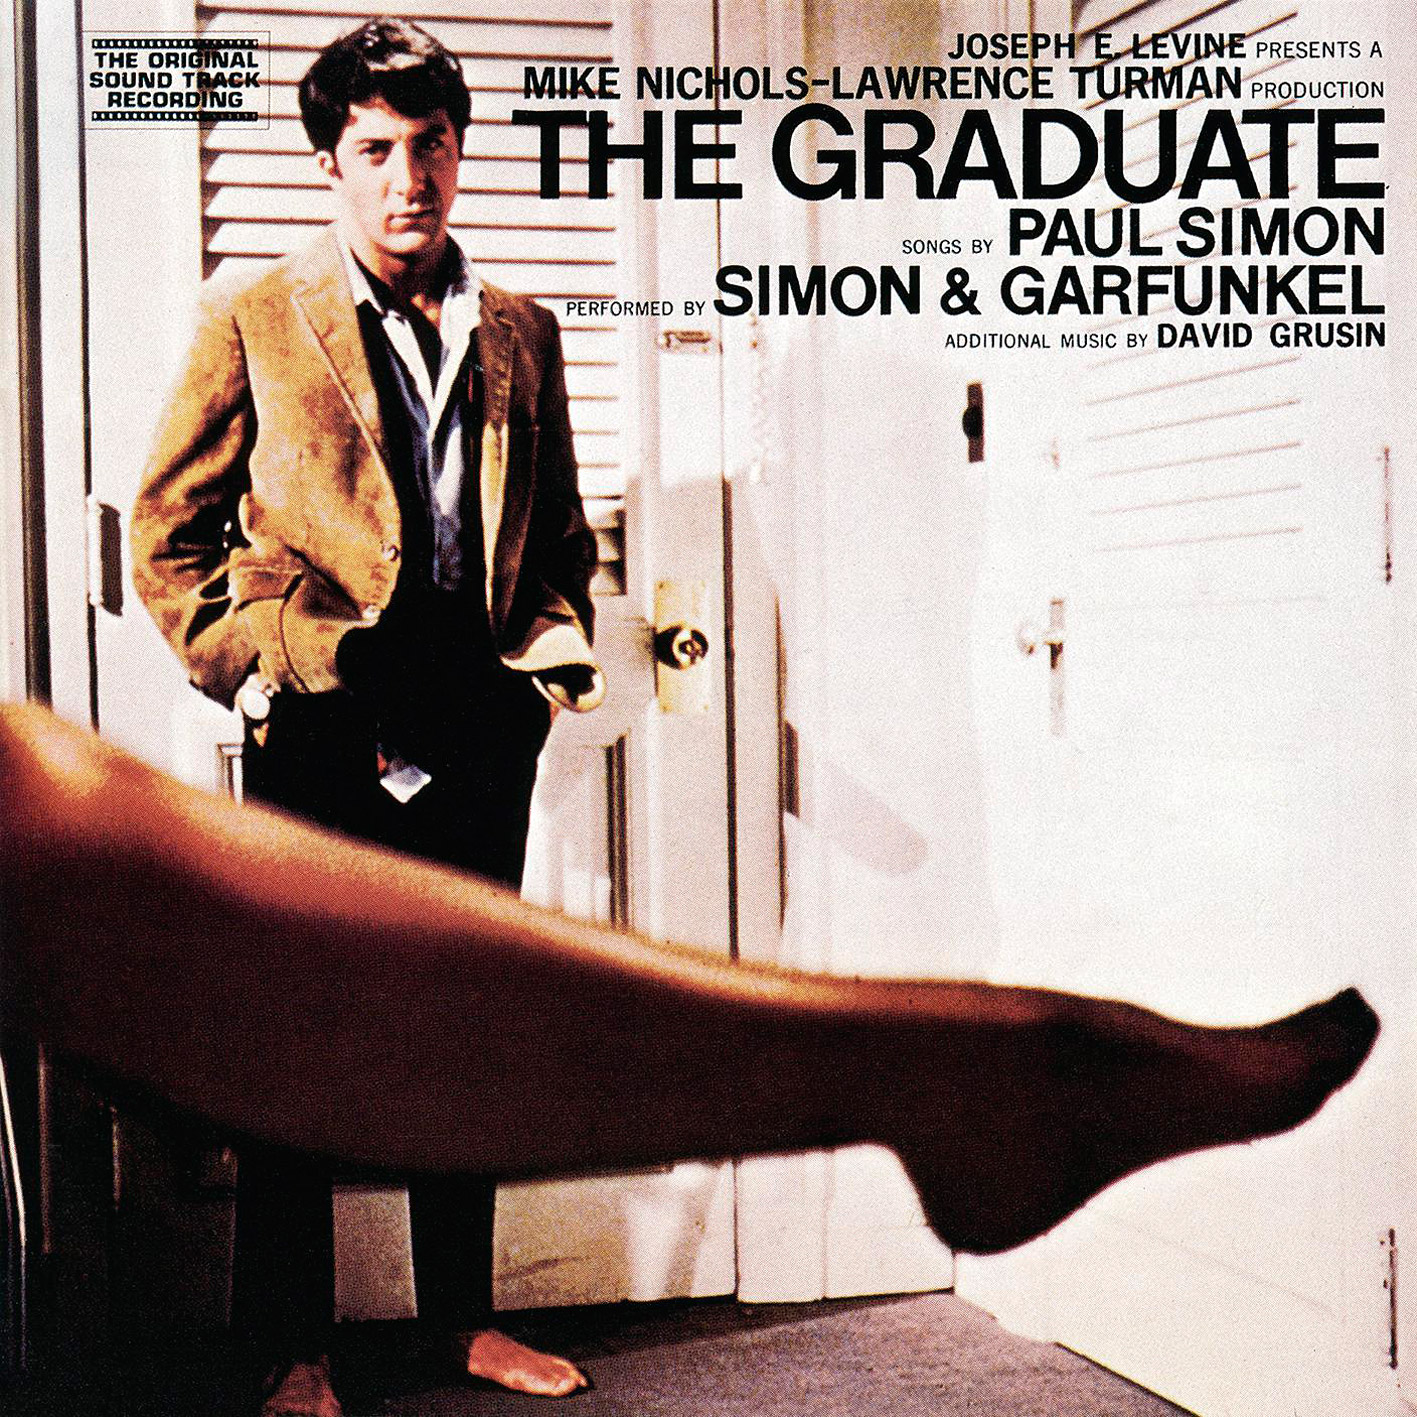 Simon & Garfunkel - The Graduate OST (1968/2014) [HDTracks FLAC 24bit/192kHz]